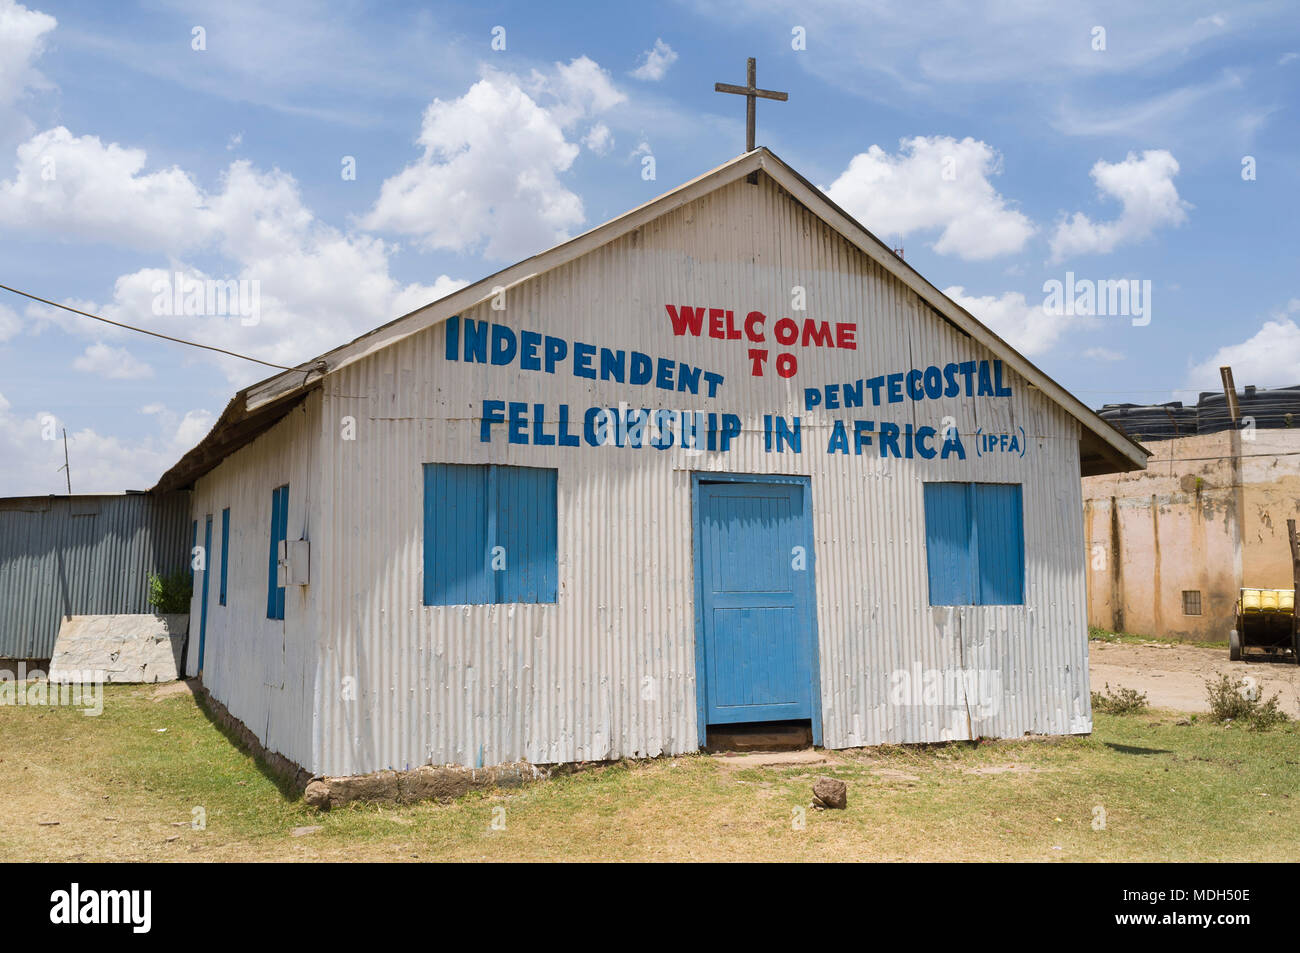 Independent Pentecostal Fellowship in Africa Church, Ngong Road, Nairobi, Kenya Stock Photo